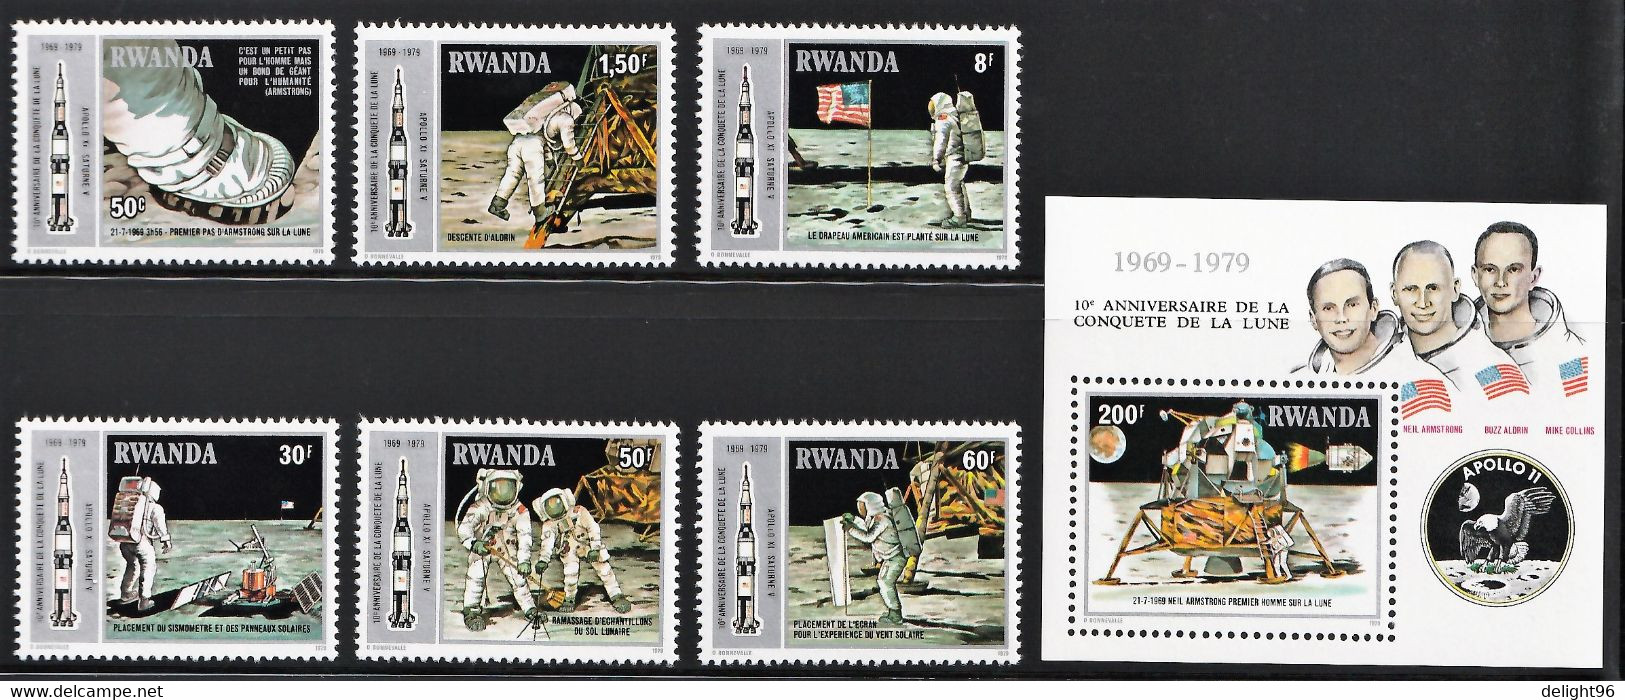 1980 Rwanda 10th Anniversary Of The Moon Landing Set And Souvenir Sheet (** / MNH / UMM) - Africa